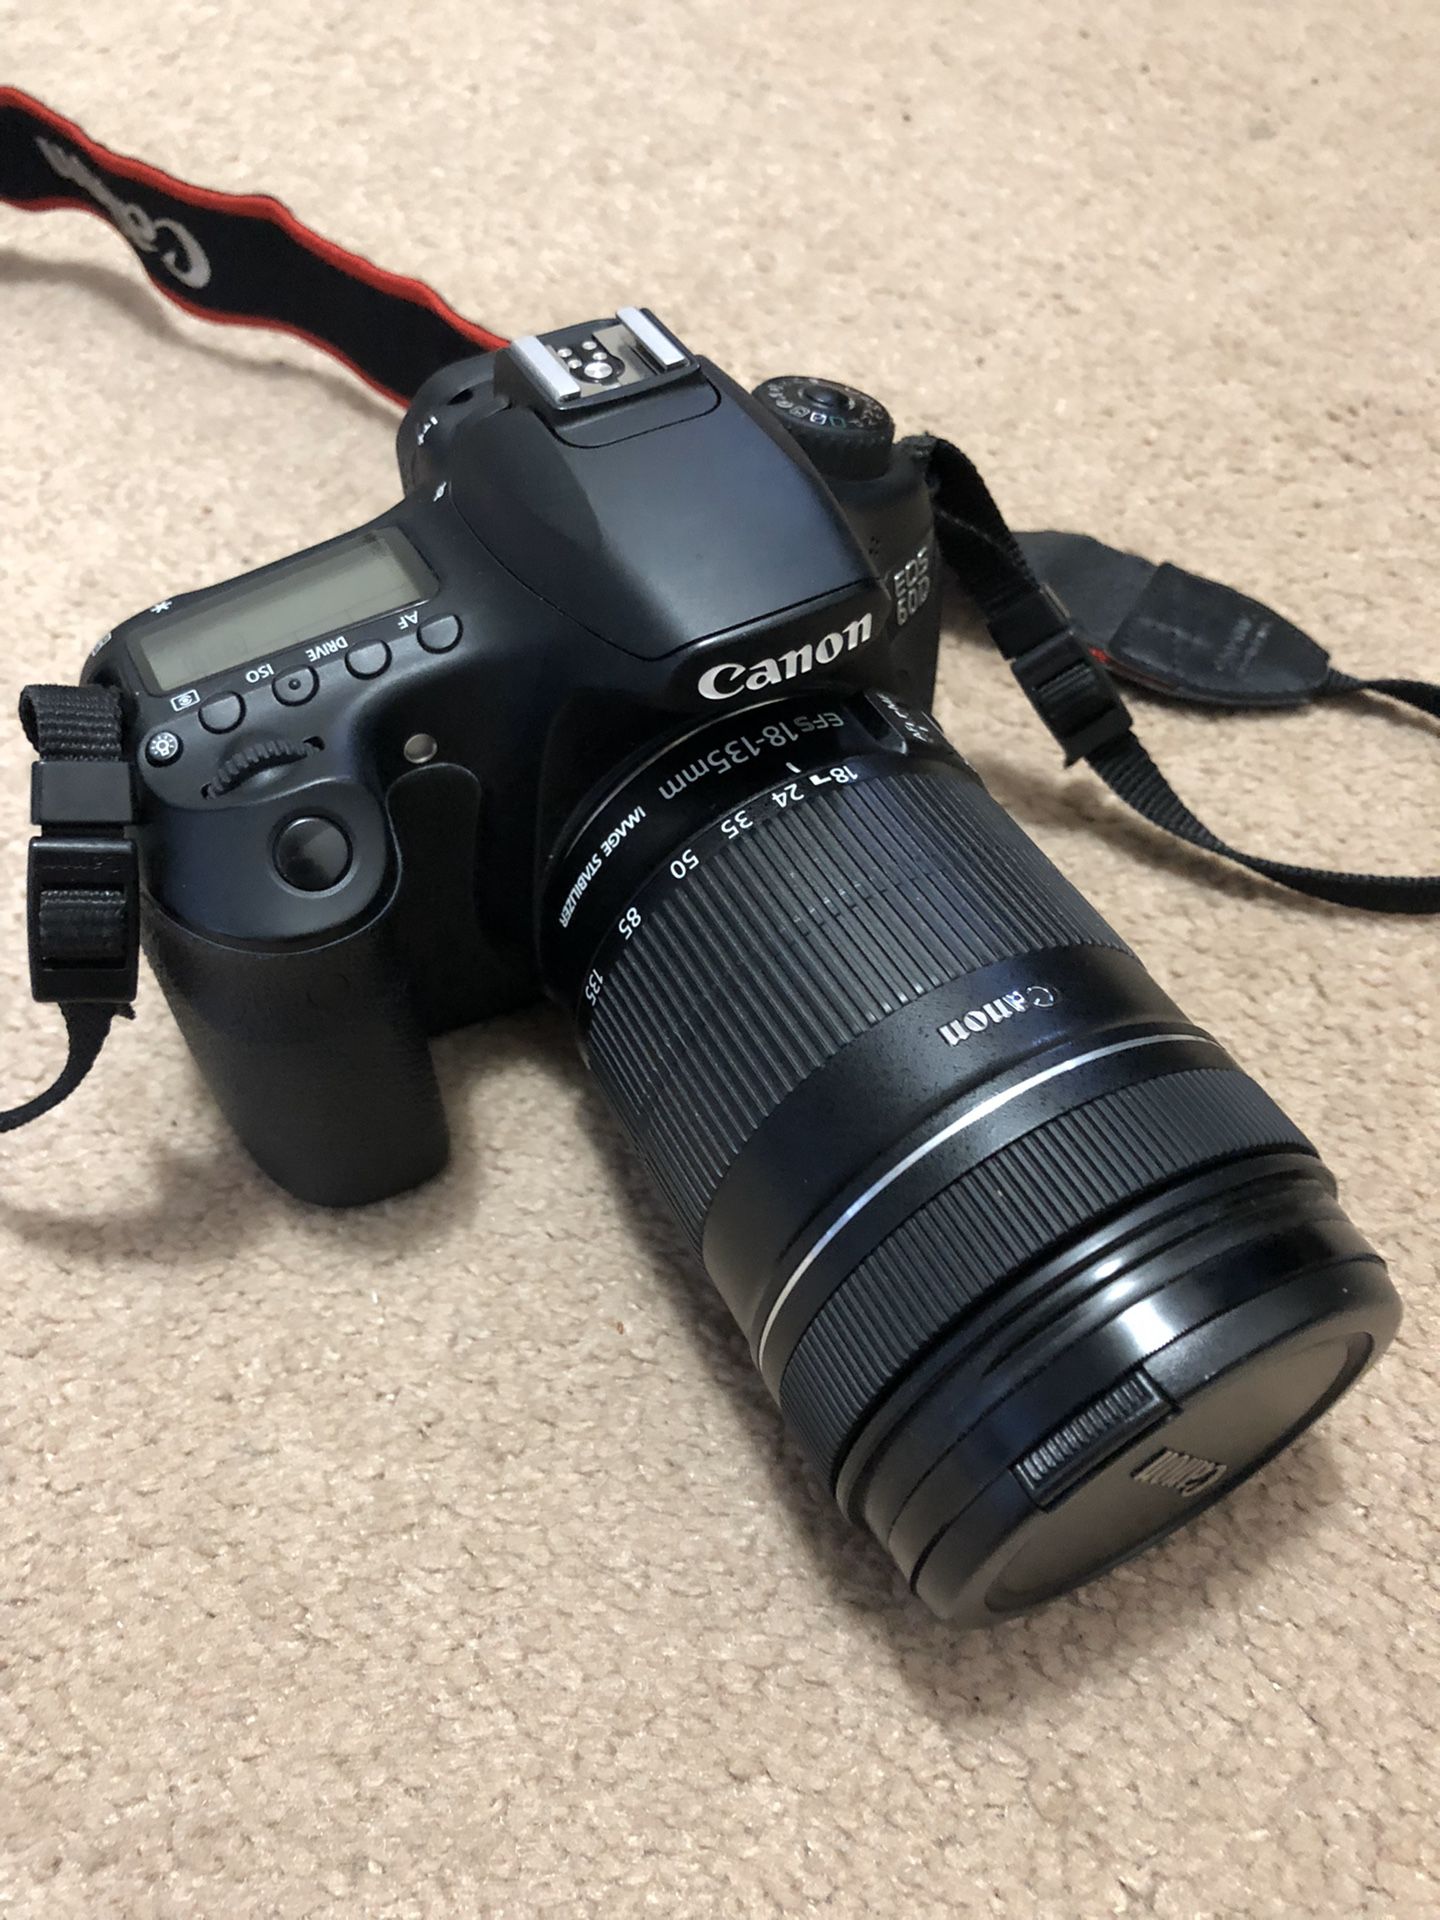 Canon EOS 60D DSLR digital camera & Eternal flash